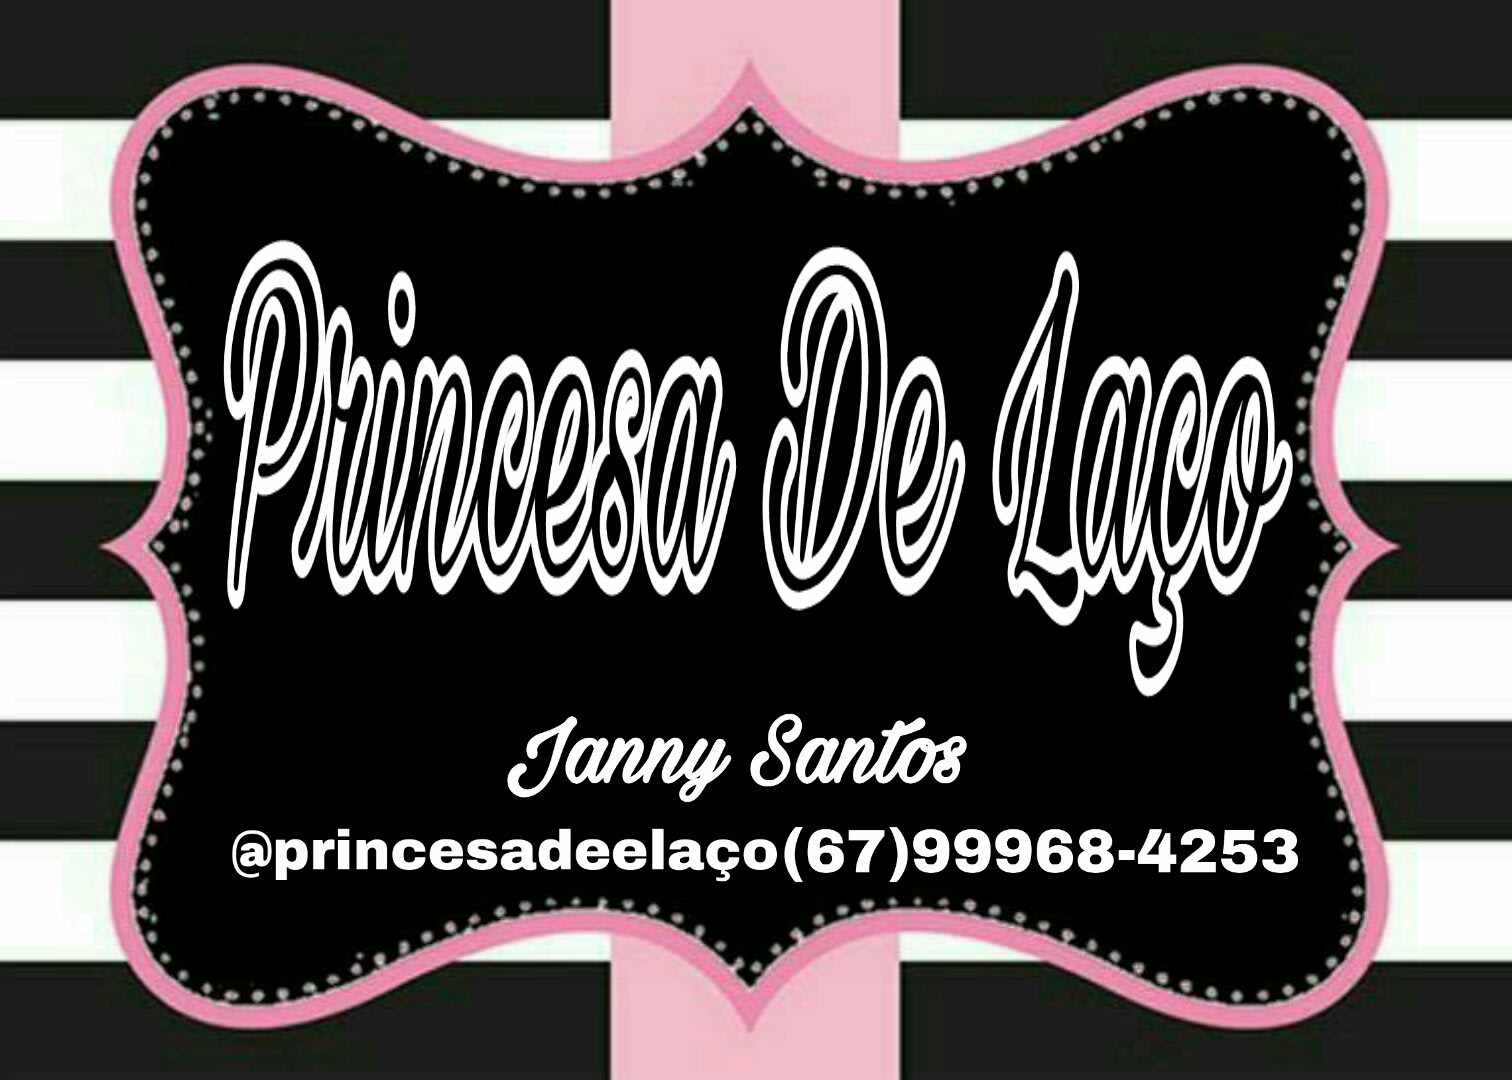 Princesa de Laço